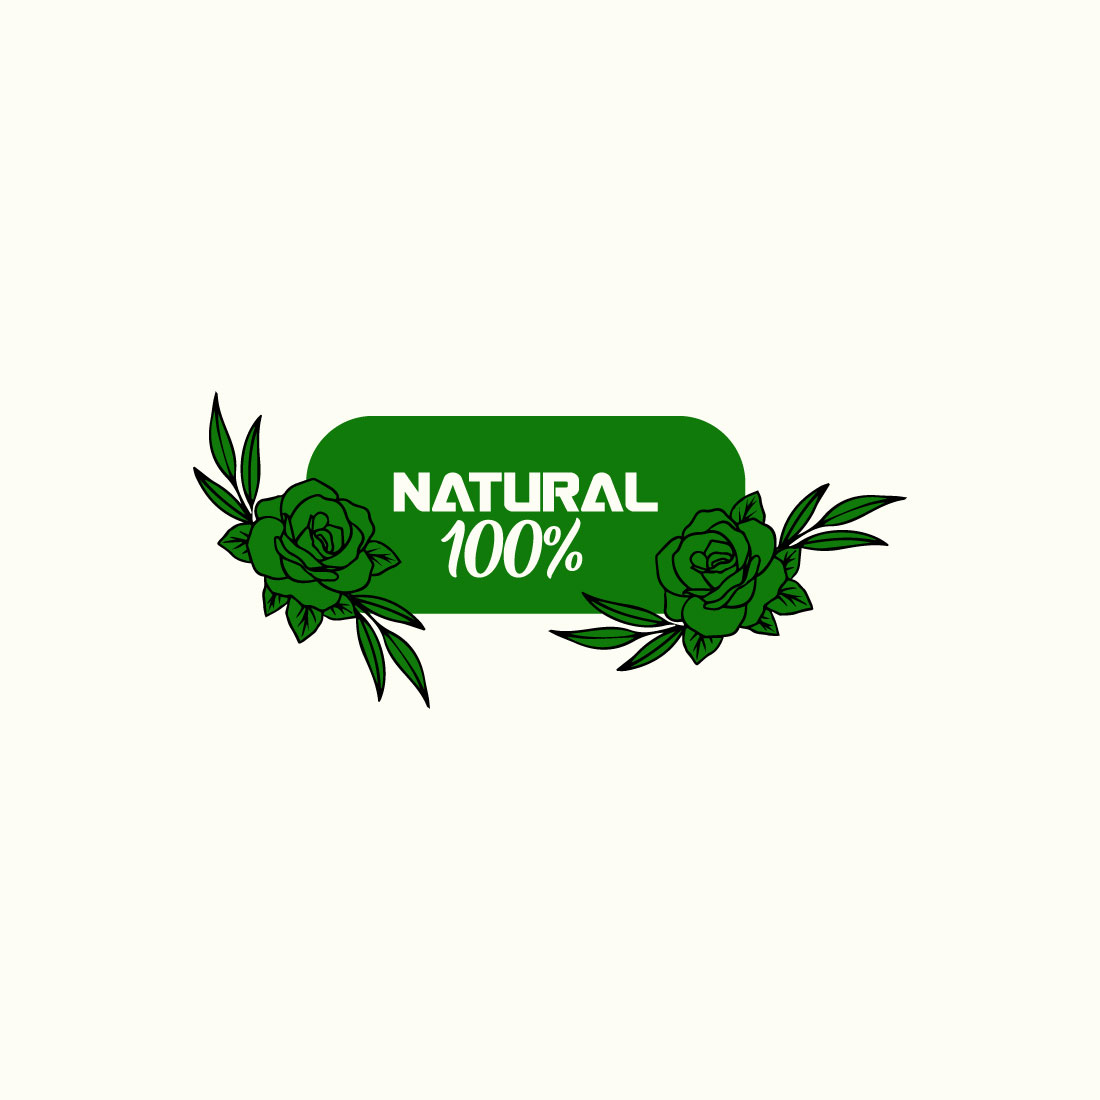 Free 100 natural logo cover image.